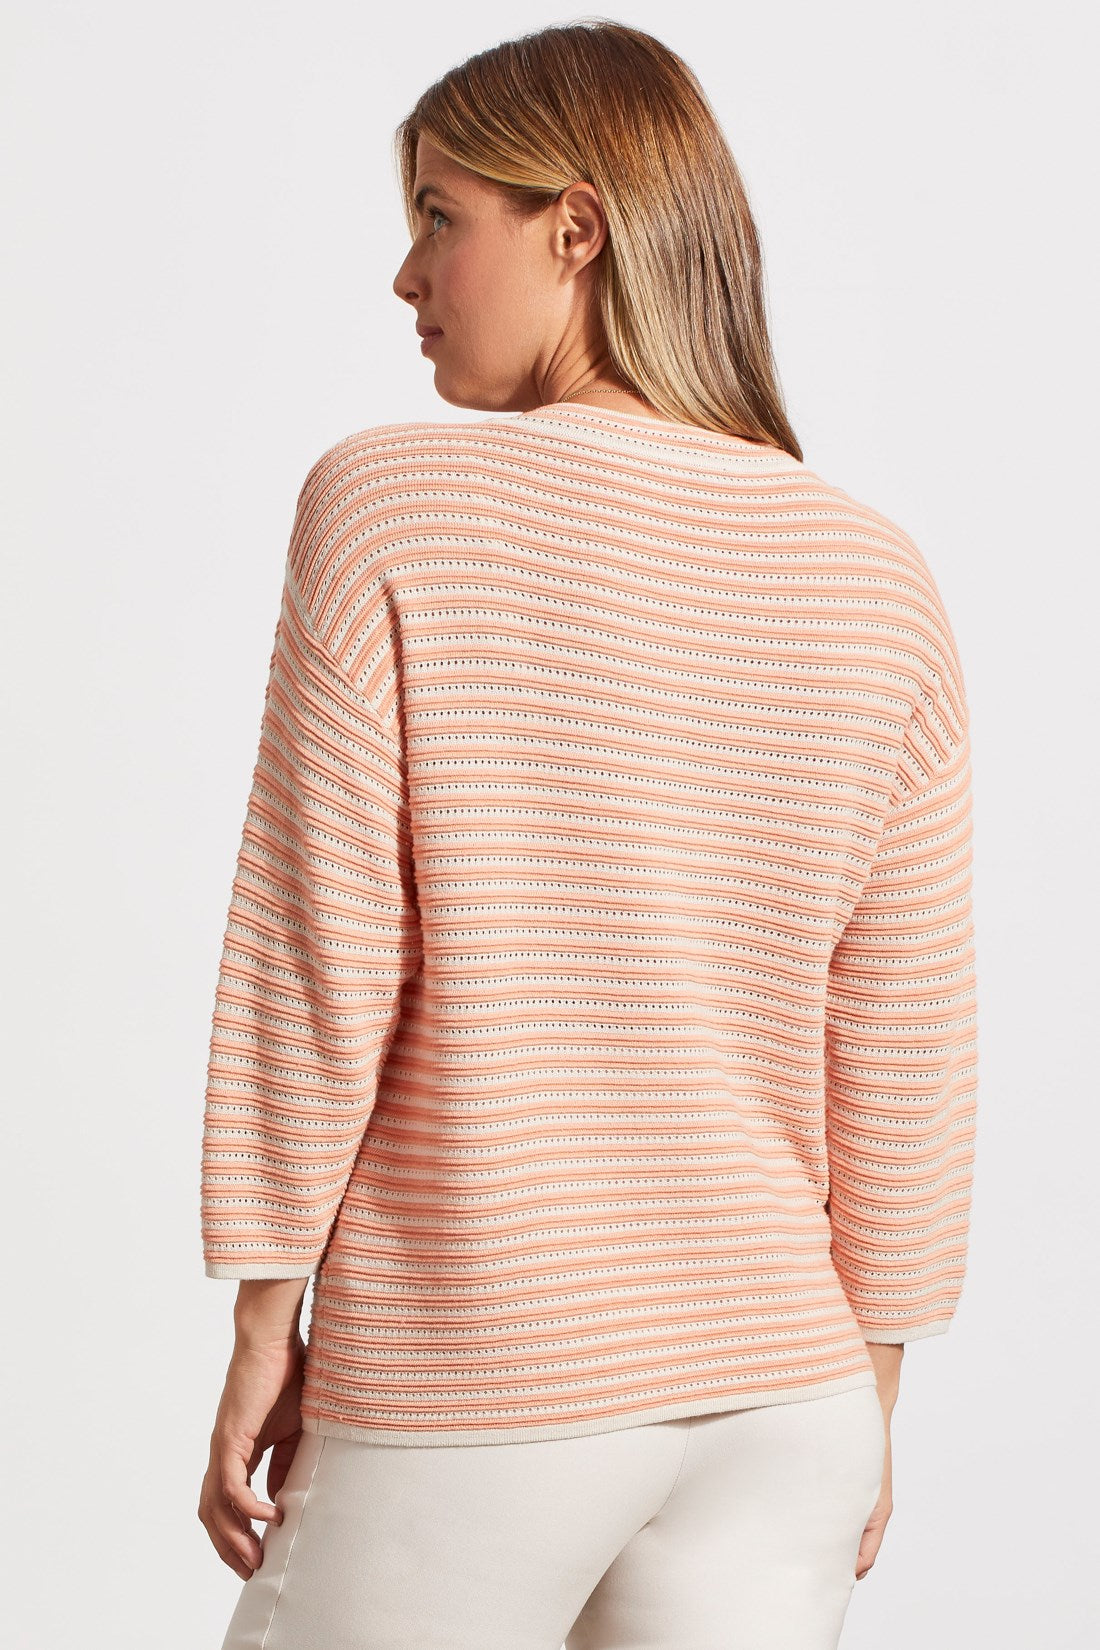 Audrey Three Quarter Sleeve Sweater